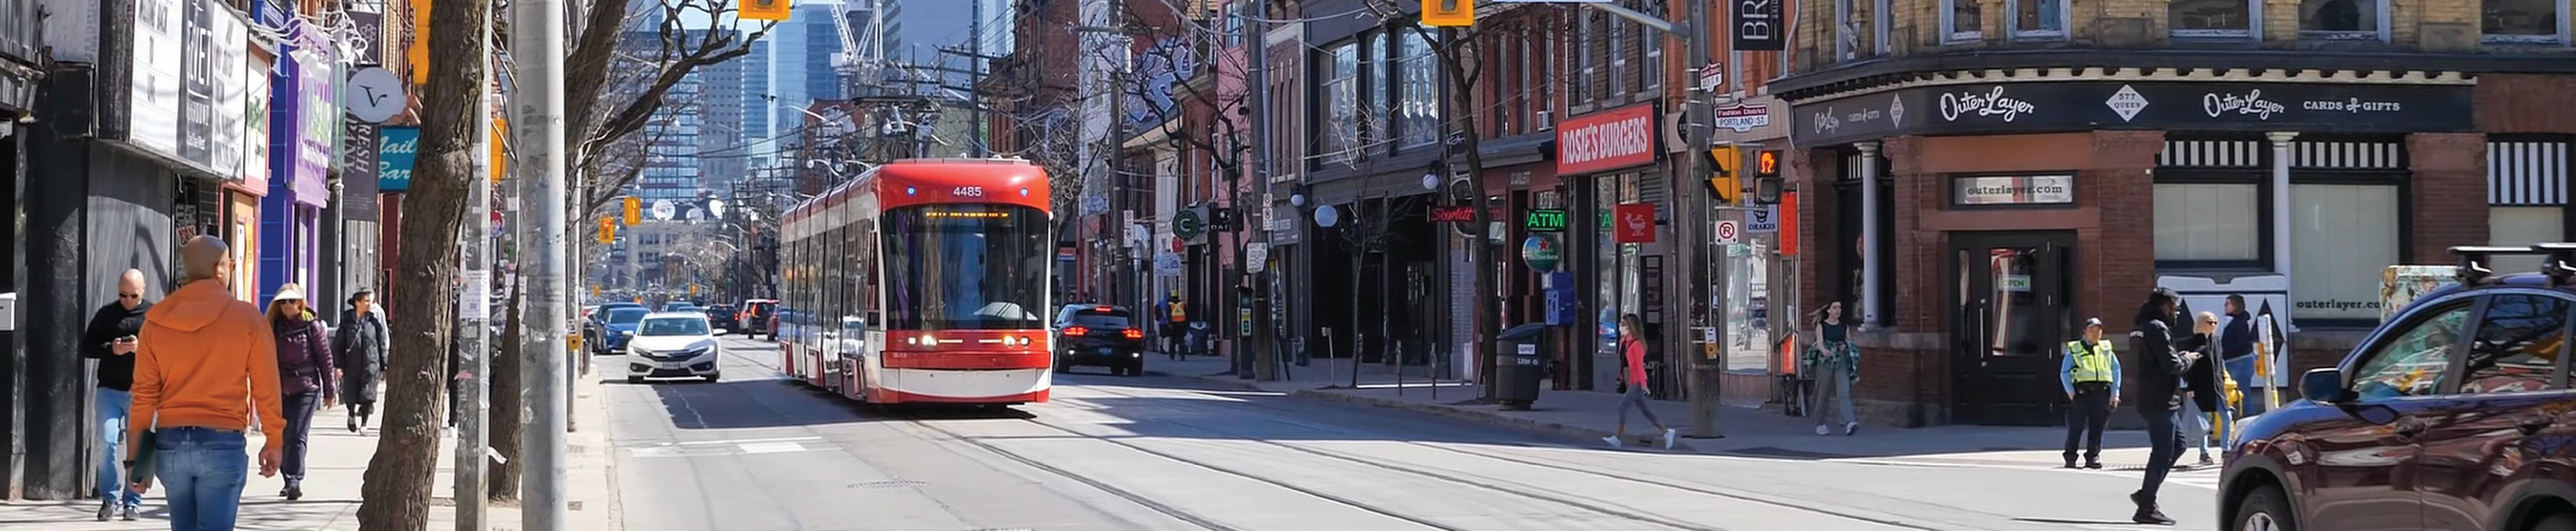 A trolley bus on a busy city street.